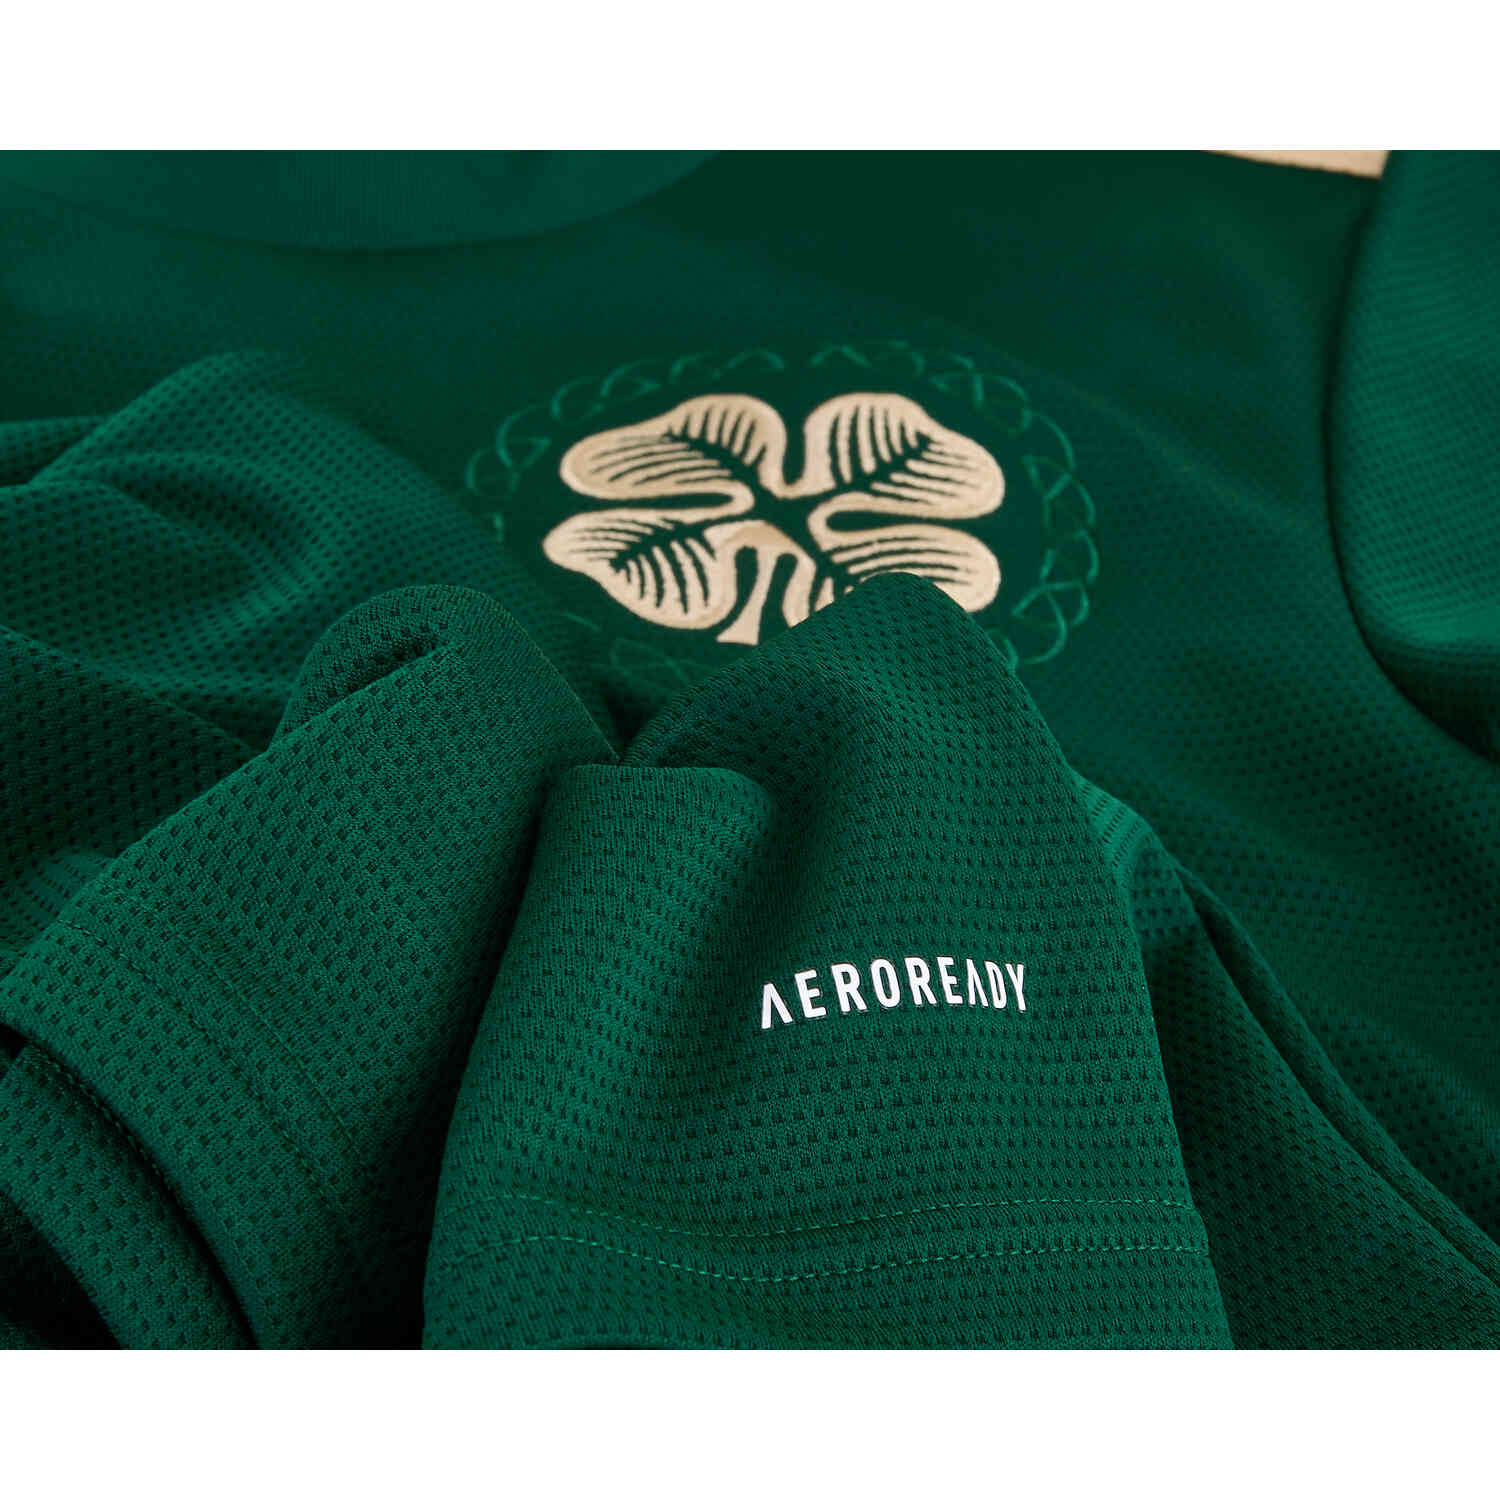 Celtic 2021-22 Adidas Away Kit - Football Shirt Culture - Latest